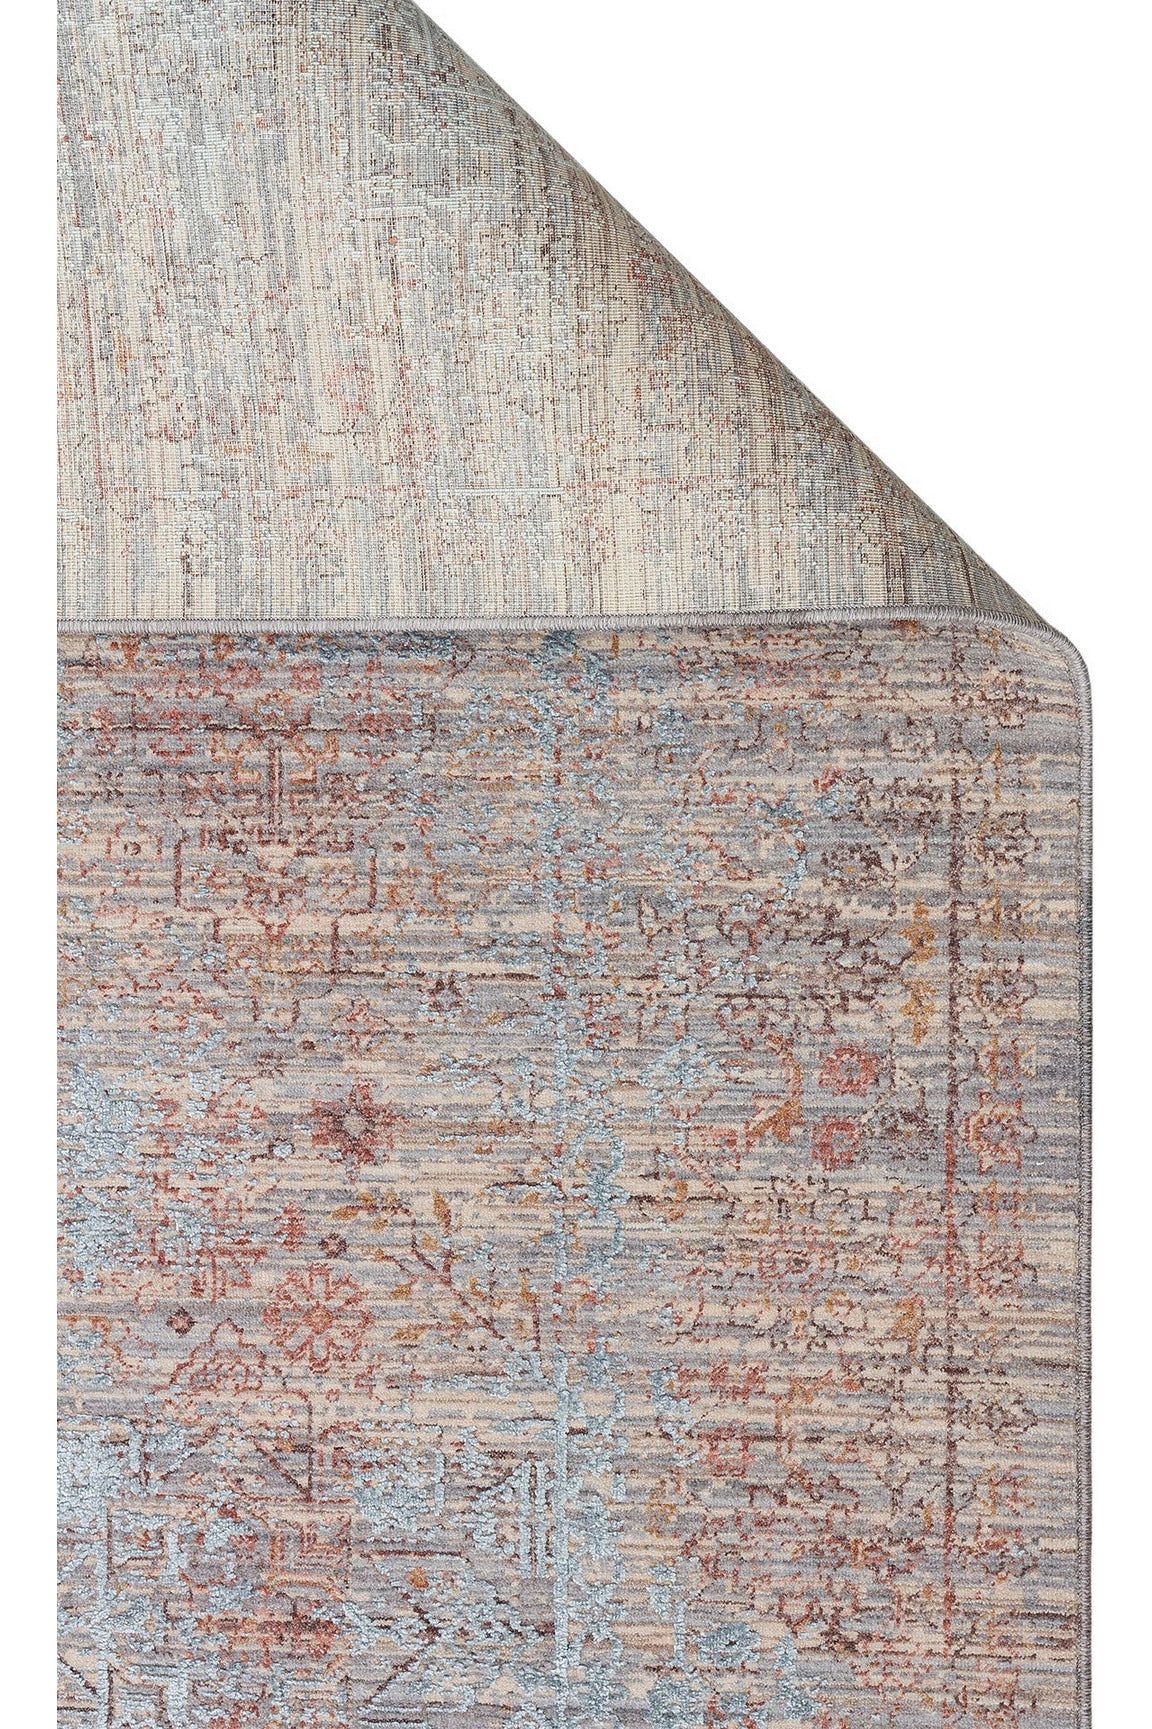 #Turkish_Carpets_Rugs# #Modern_Carpets# #Abrash_Carpets#Lpz 02 Grey